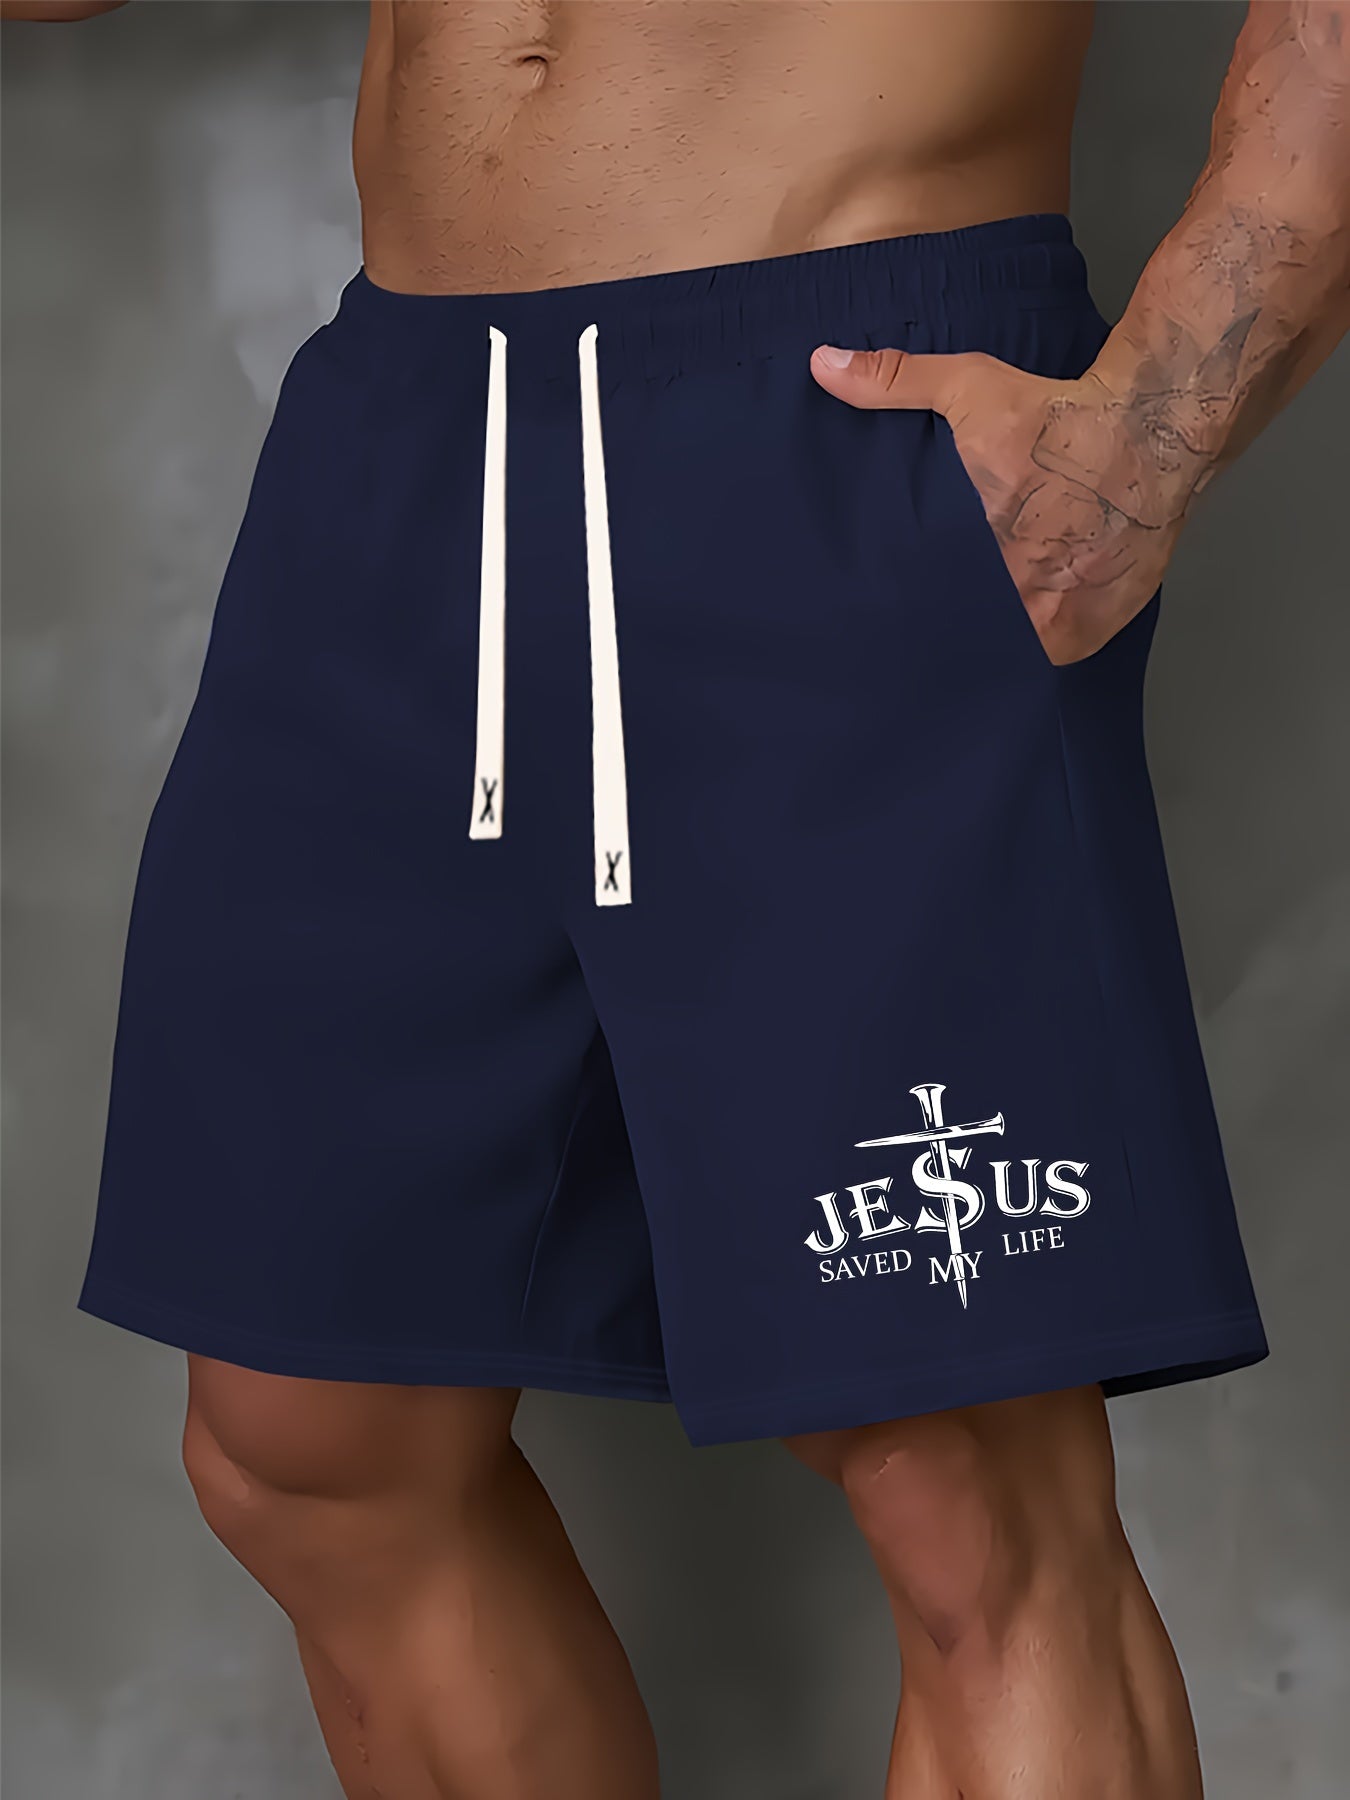 Jesus Saved My Life Men's Christian Shorts claimedbygoddesigns